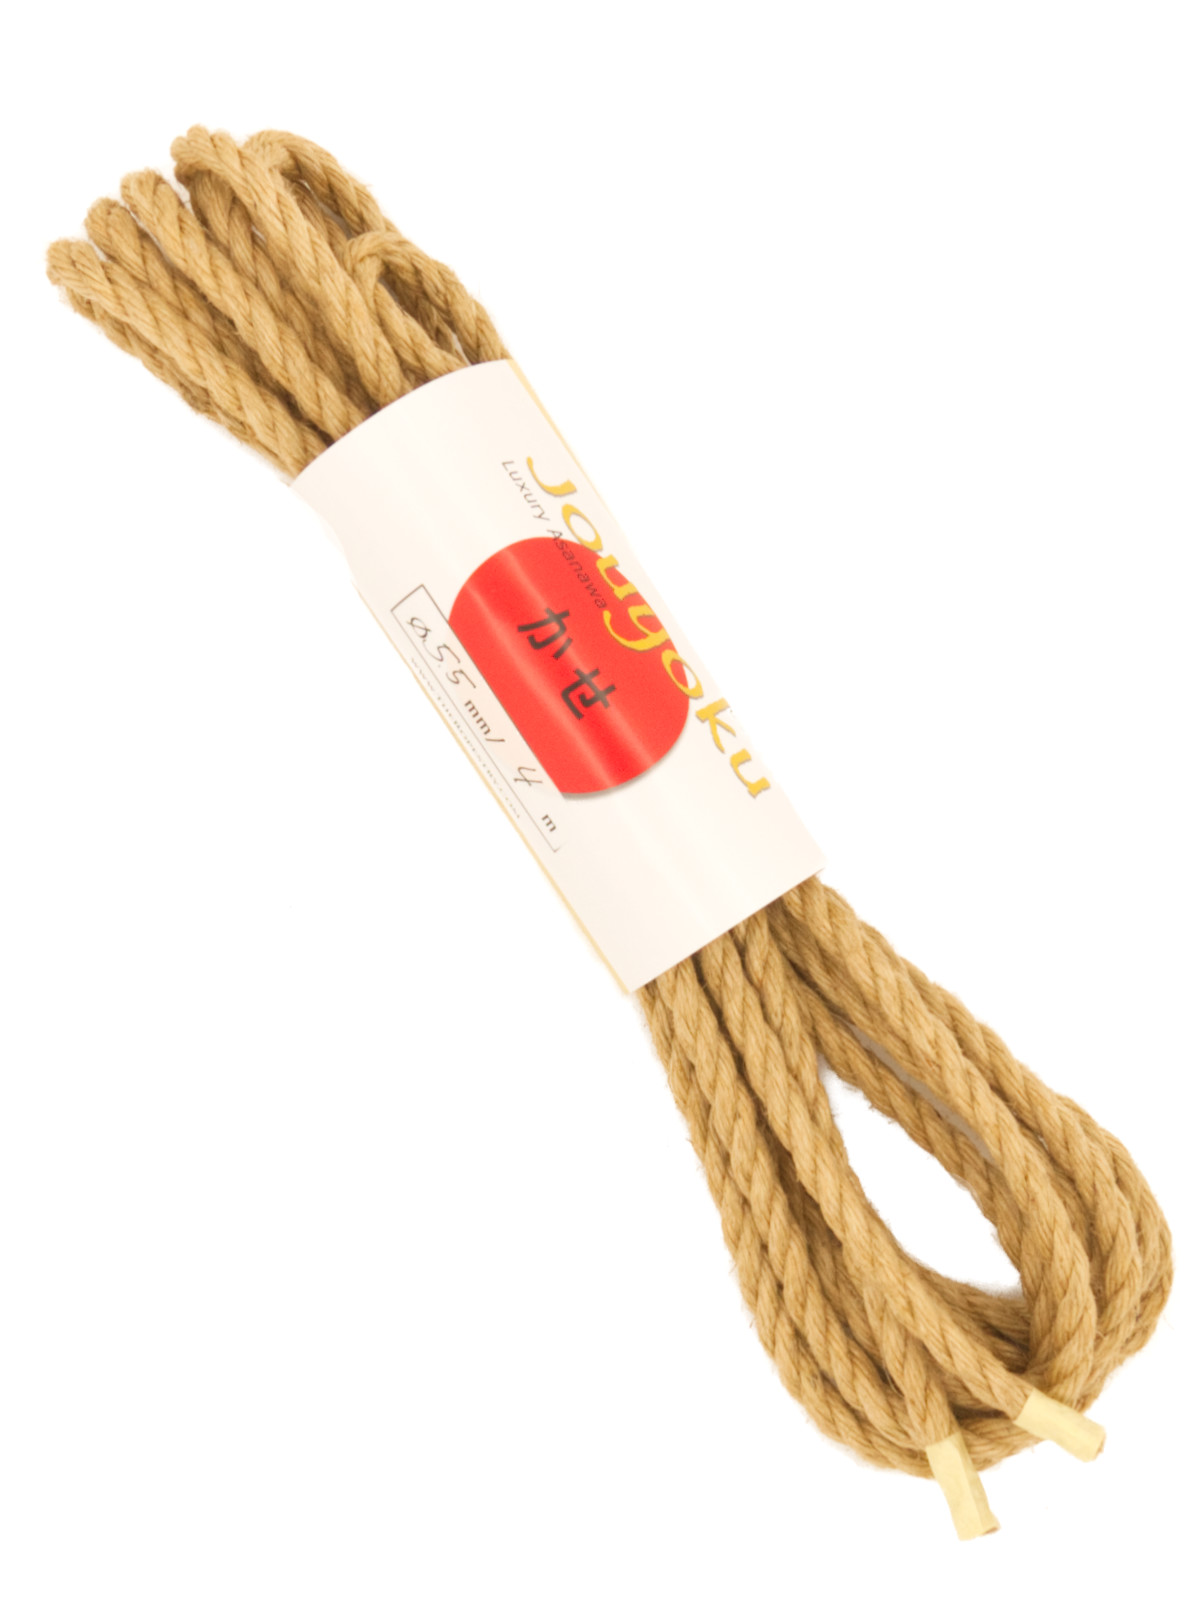 ø 5.5mm Jouyoku jute rope for Shibari, Kinbaku bondage, various lengths